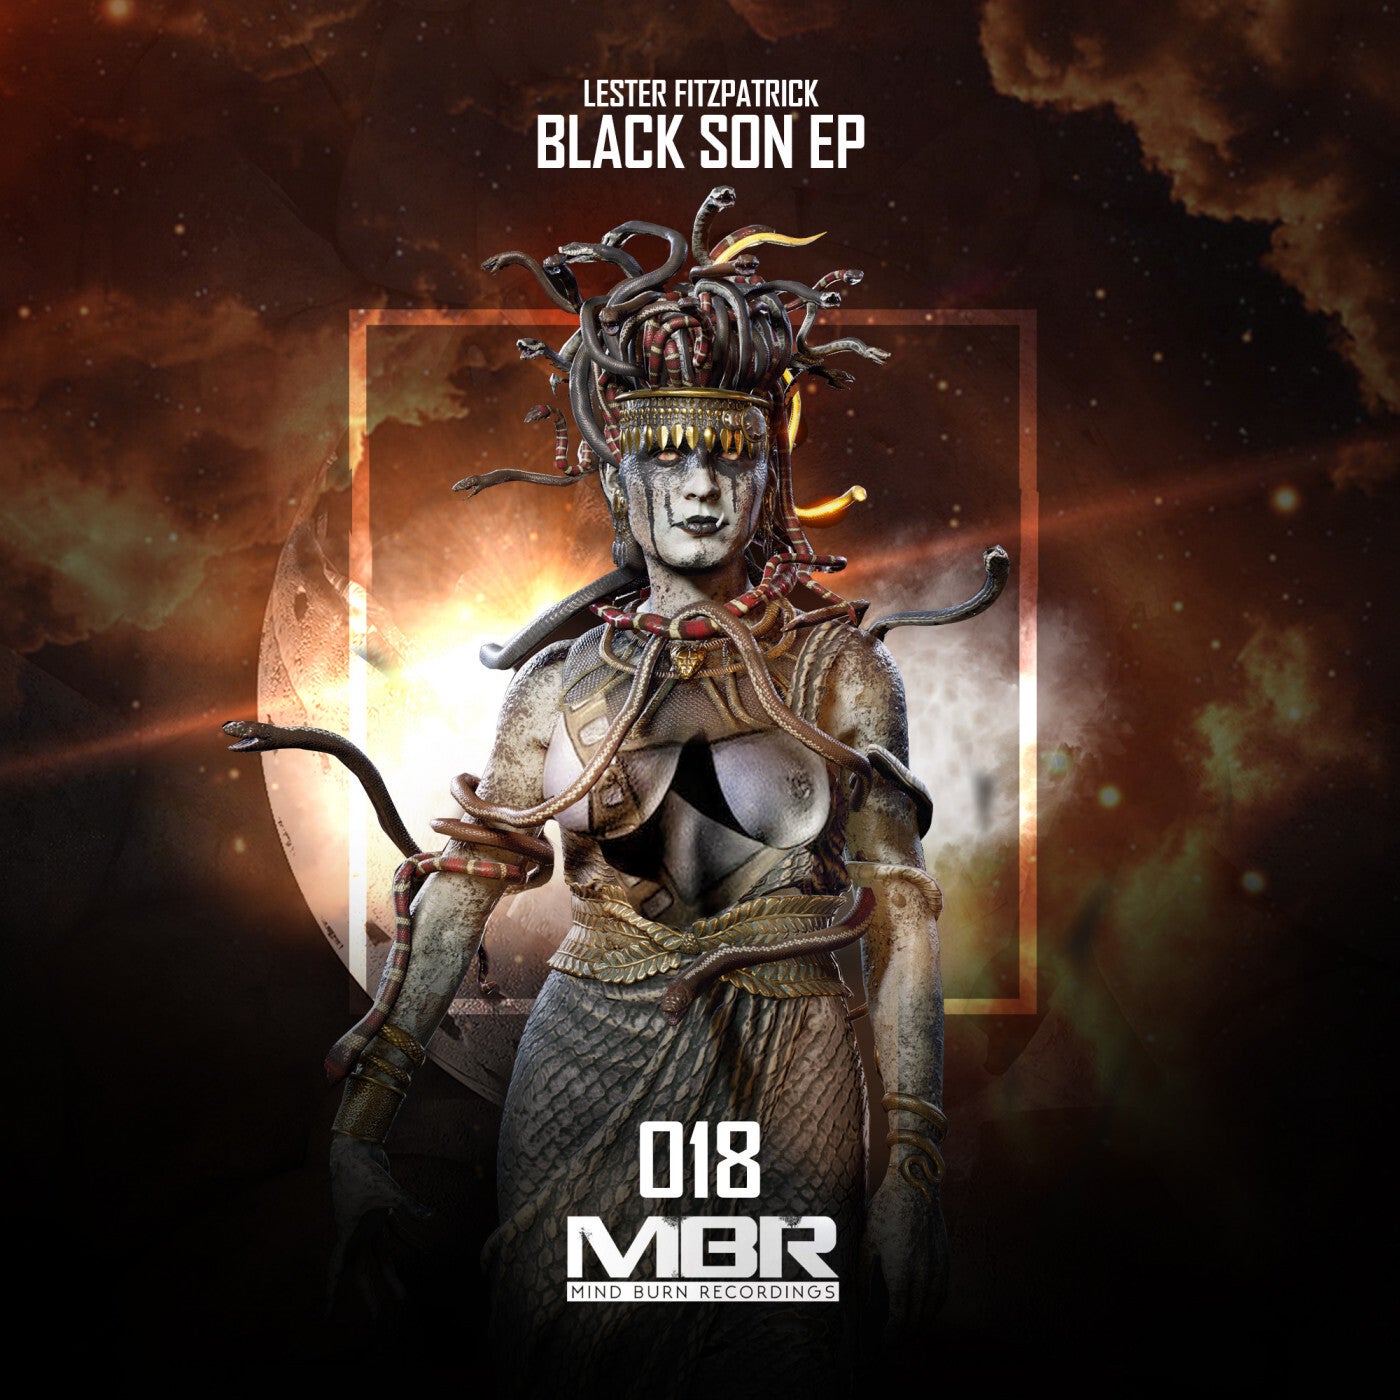 Black Son EP